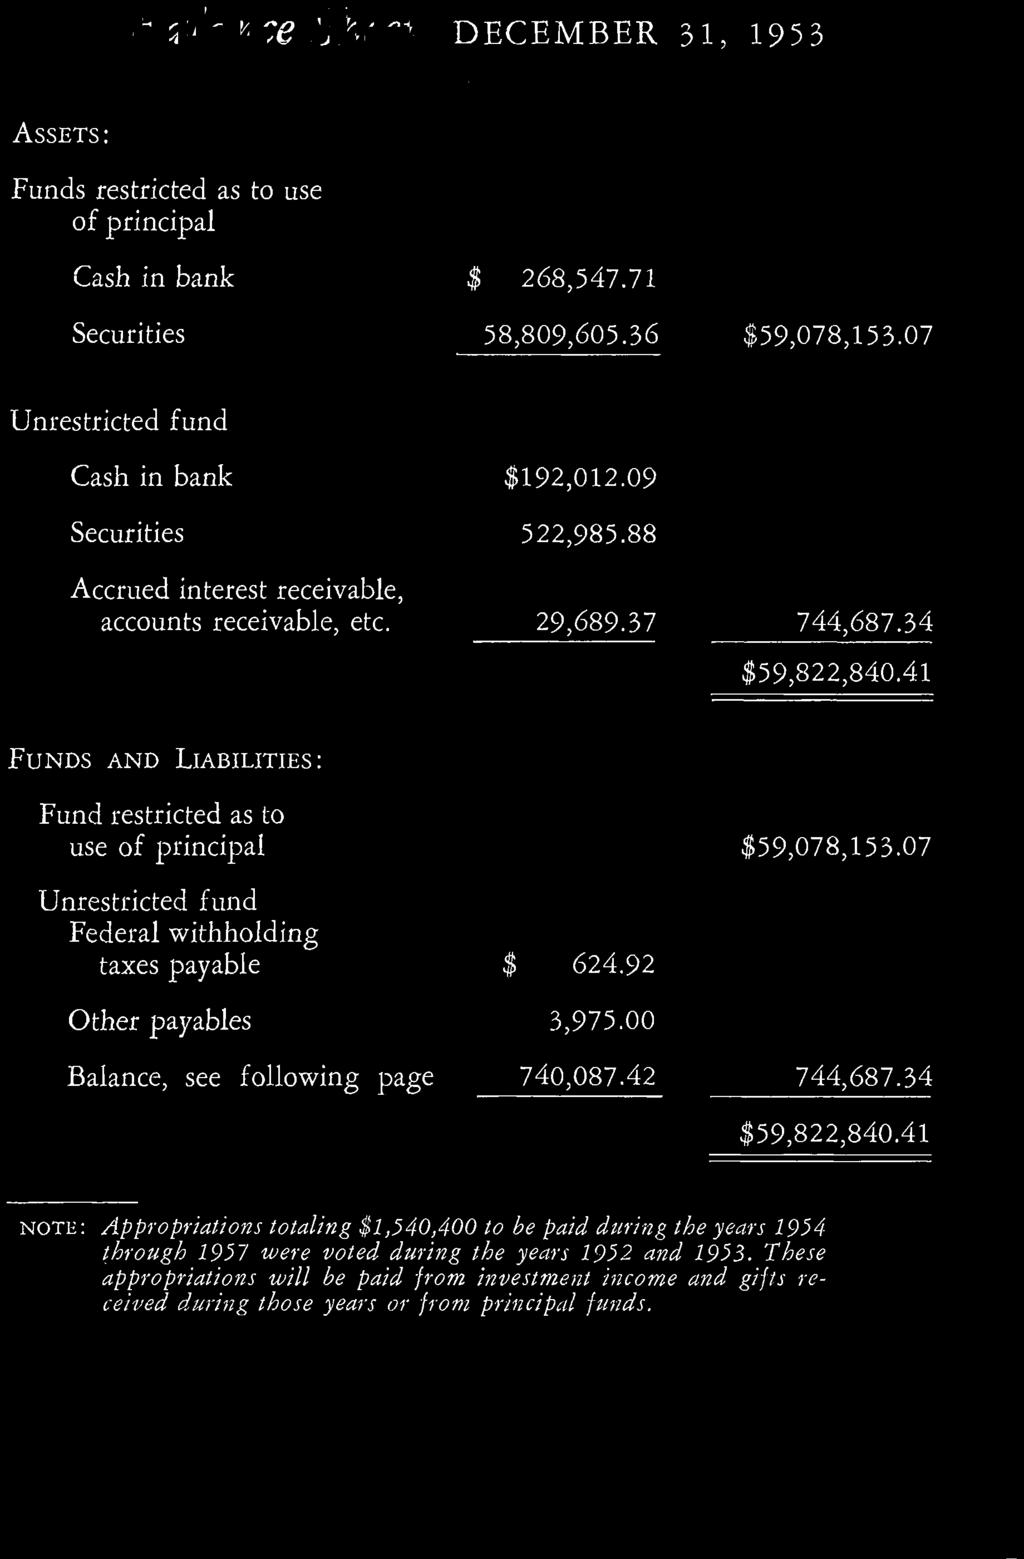 00 Balance, see following page 740,087.42 744,687.34 $59,822,840.